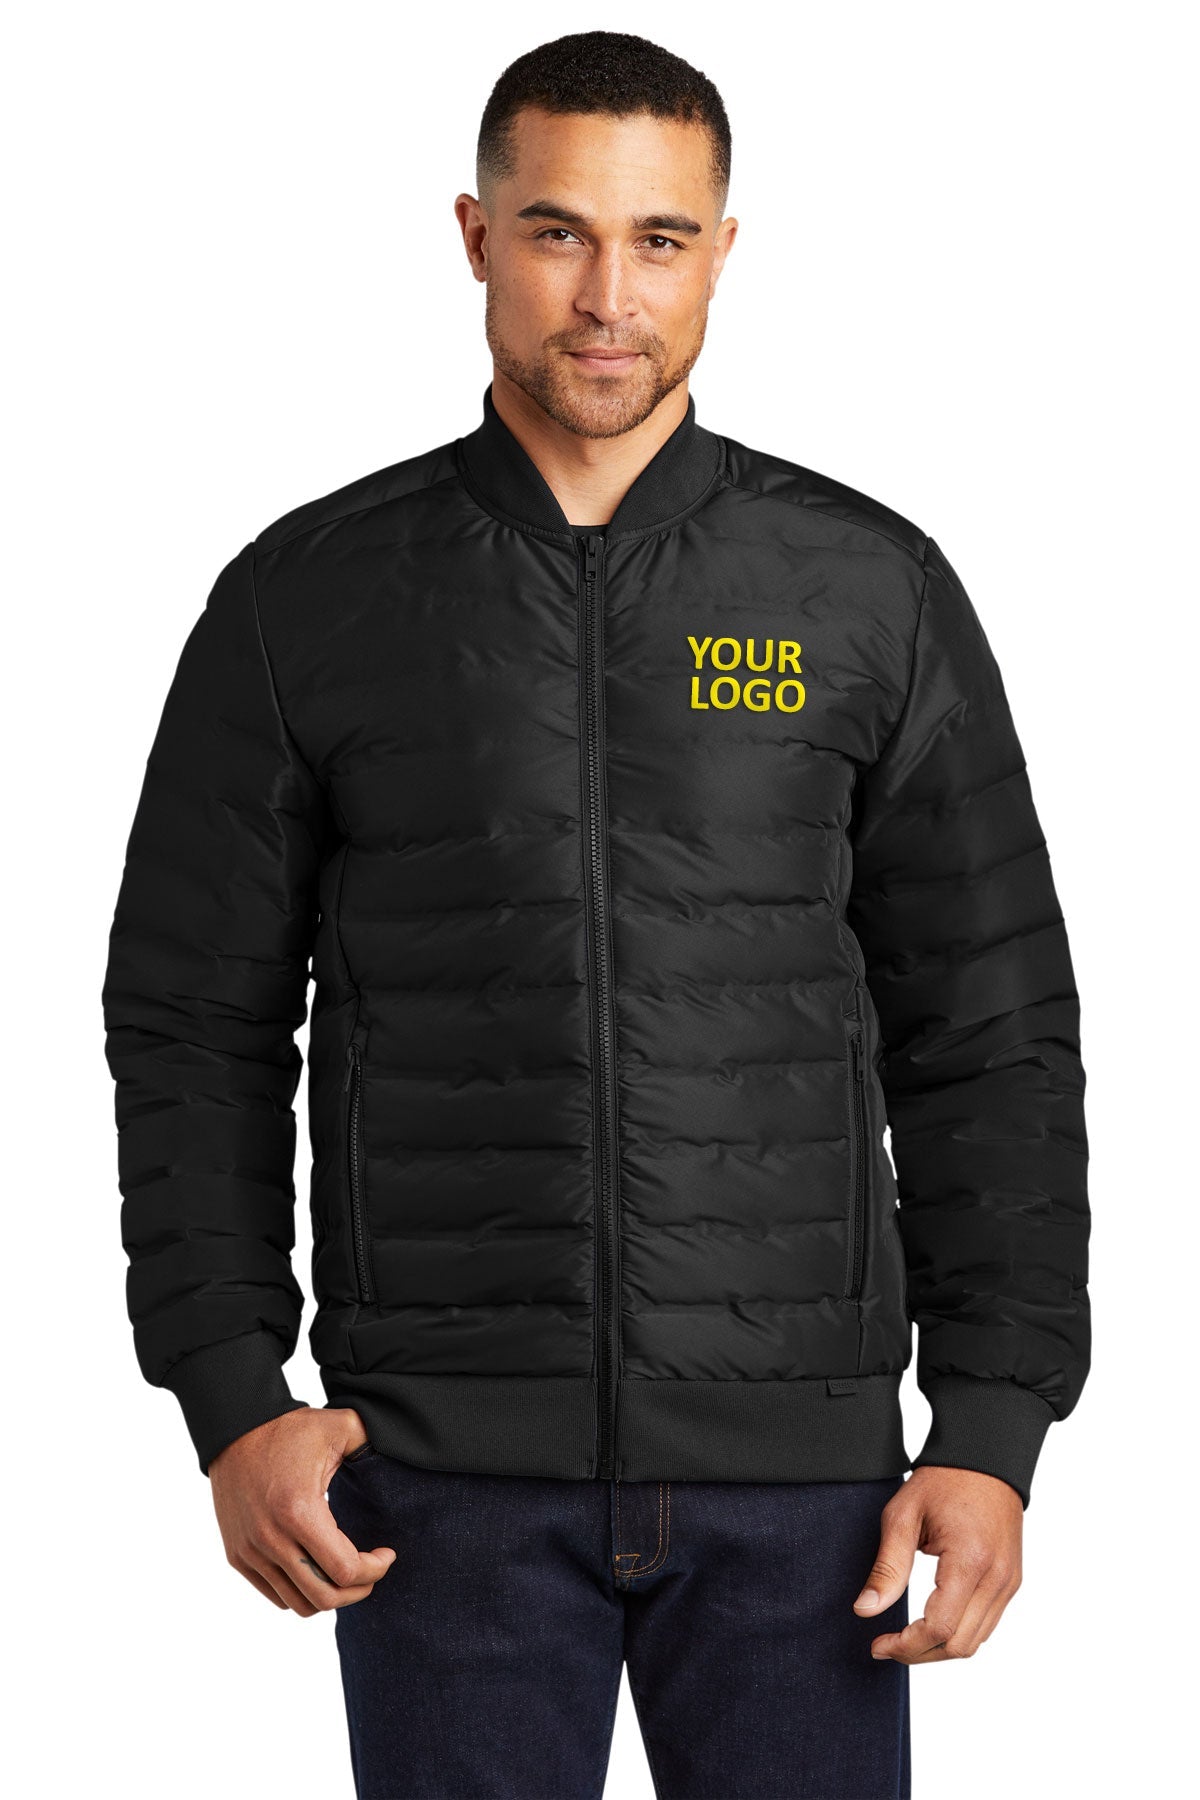 OGIO Blacktop OG753 company embroidered jackets